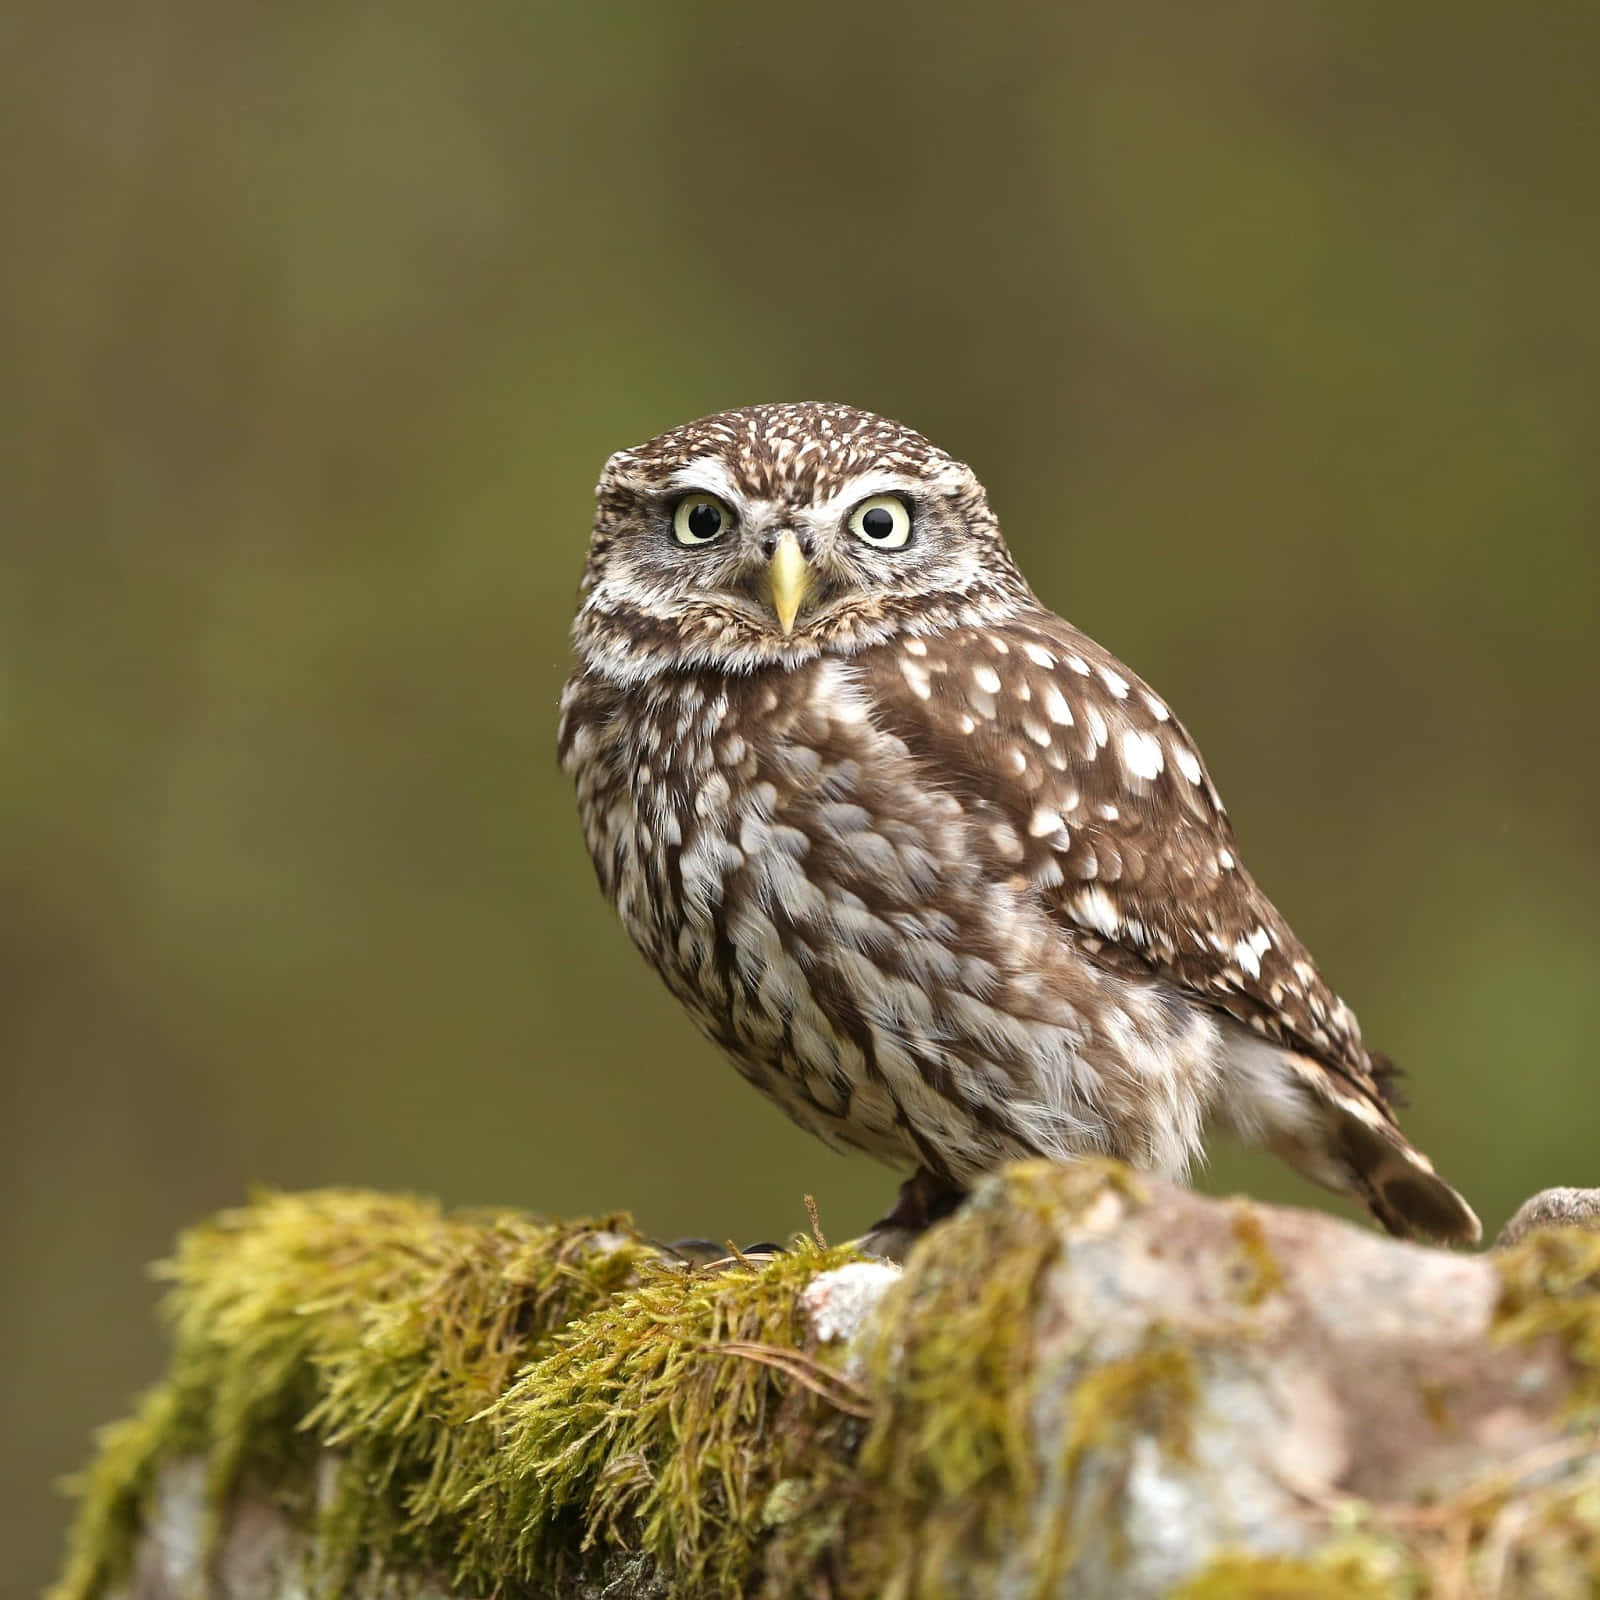 A beautiful winter owl